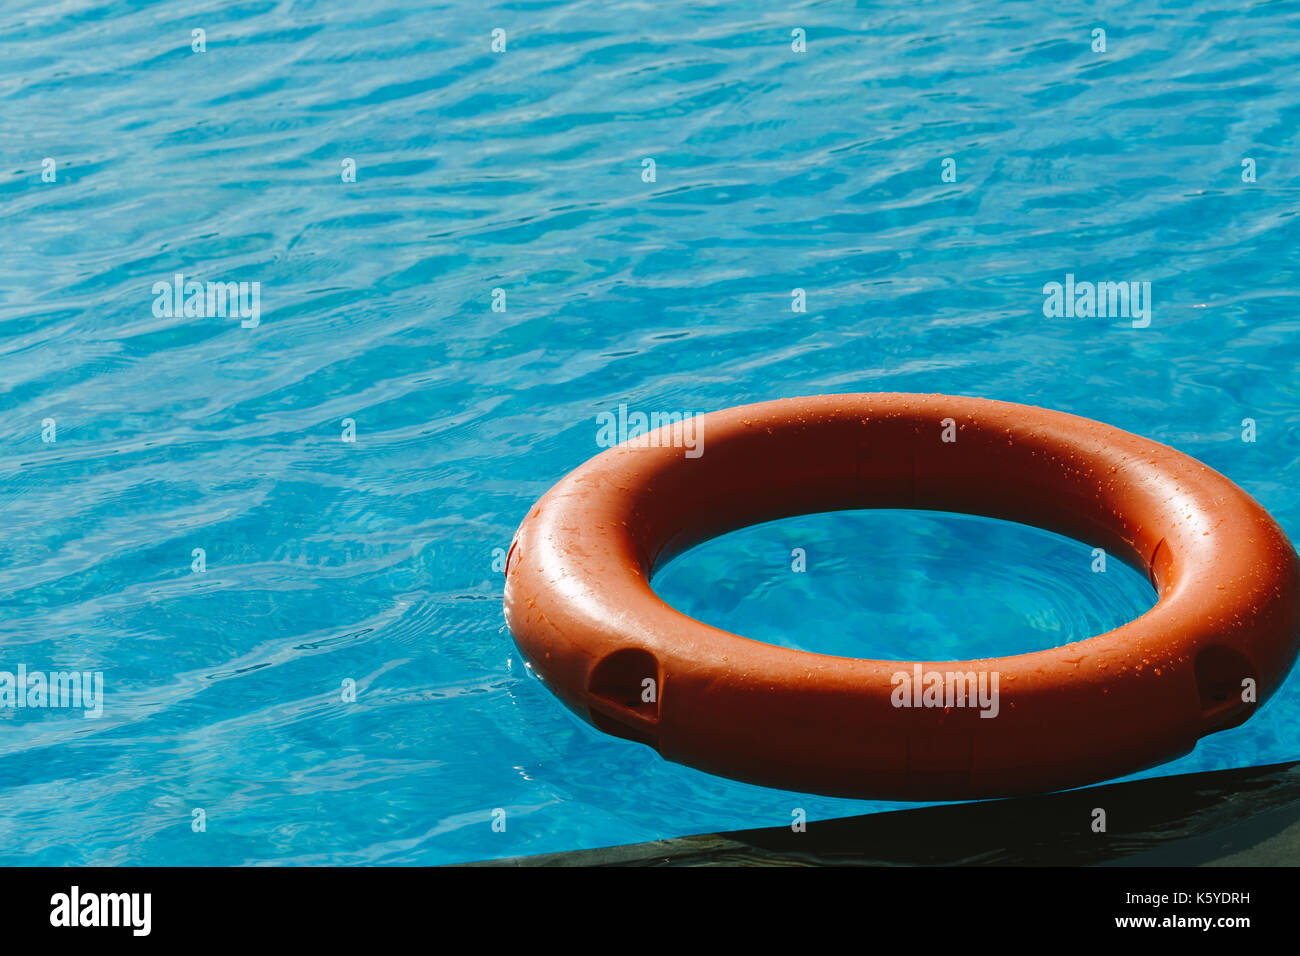 Orange lifebuoy in the blue water. Stock Photo